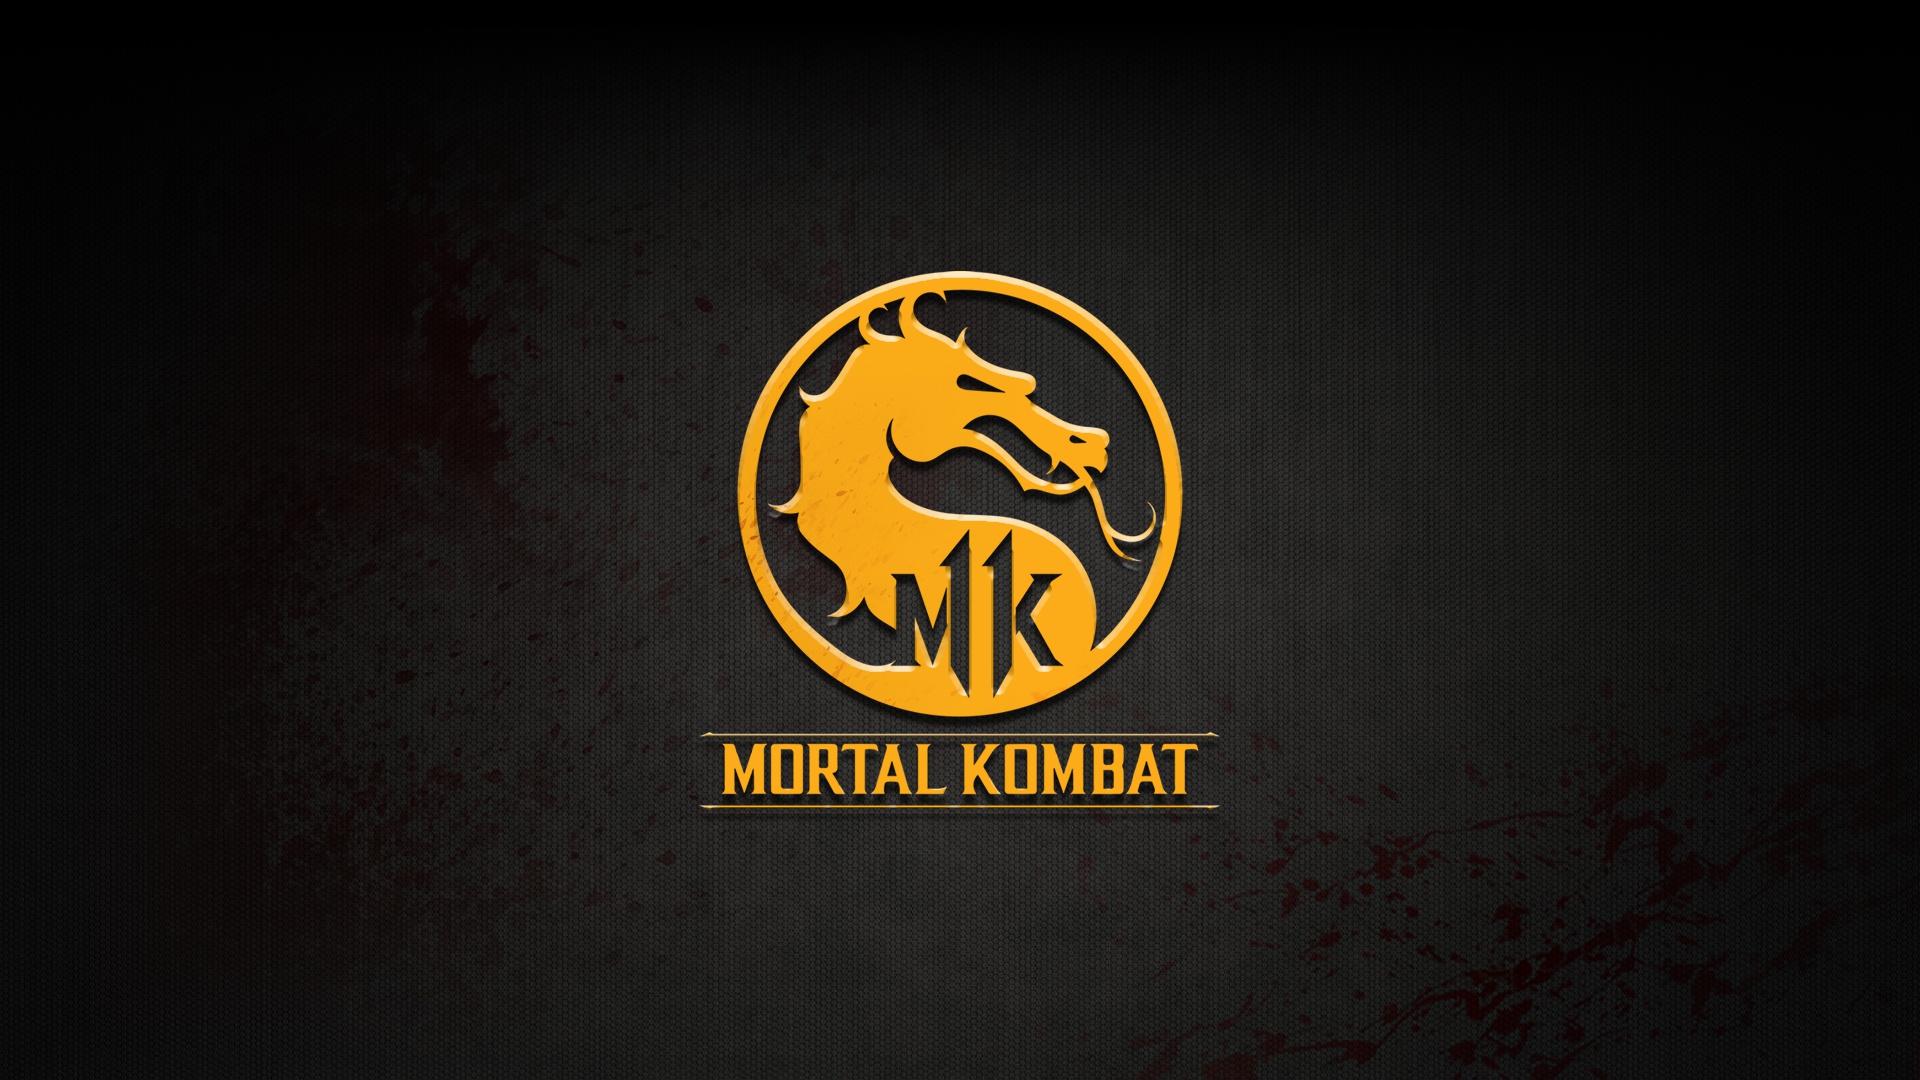 Mortal Kombat 11 background dragon logo